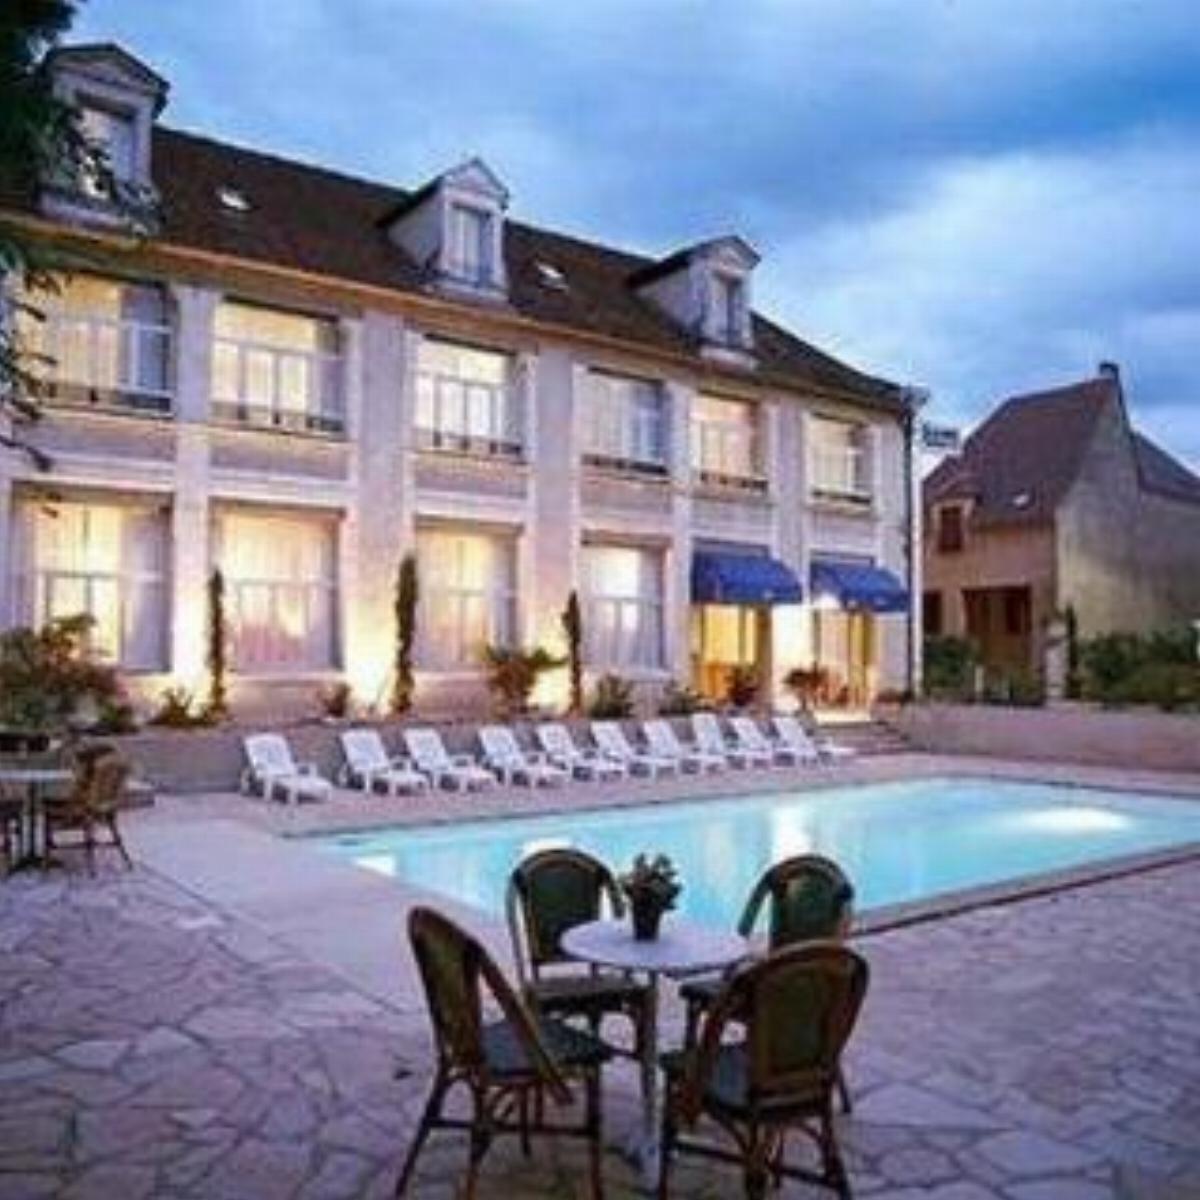 Le Renoir Hotel Dordogne France